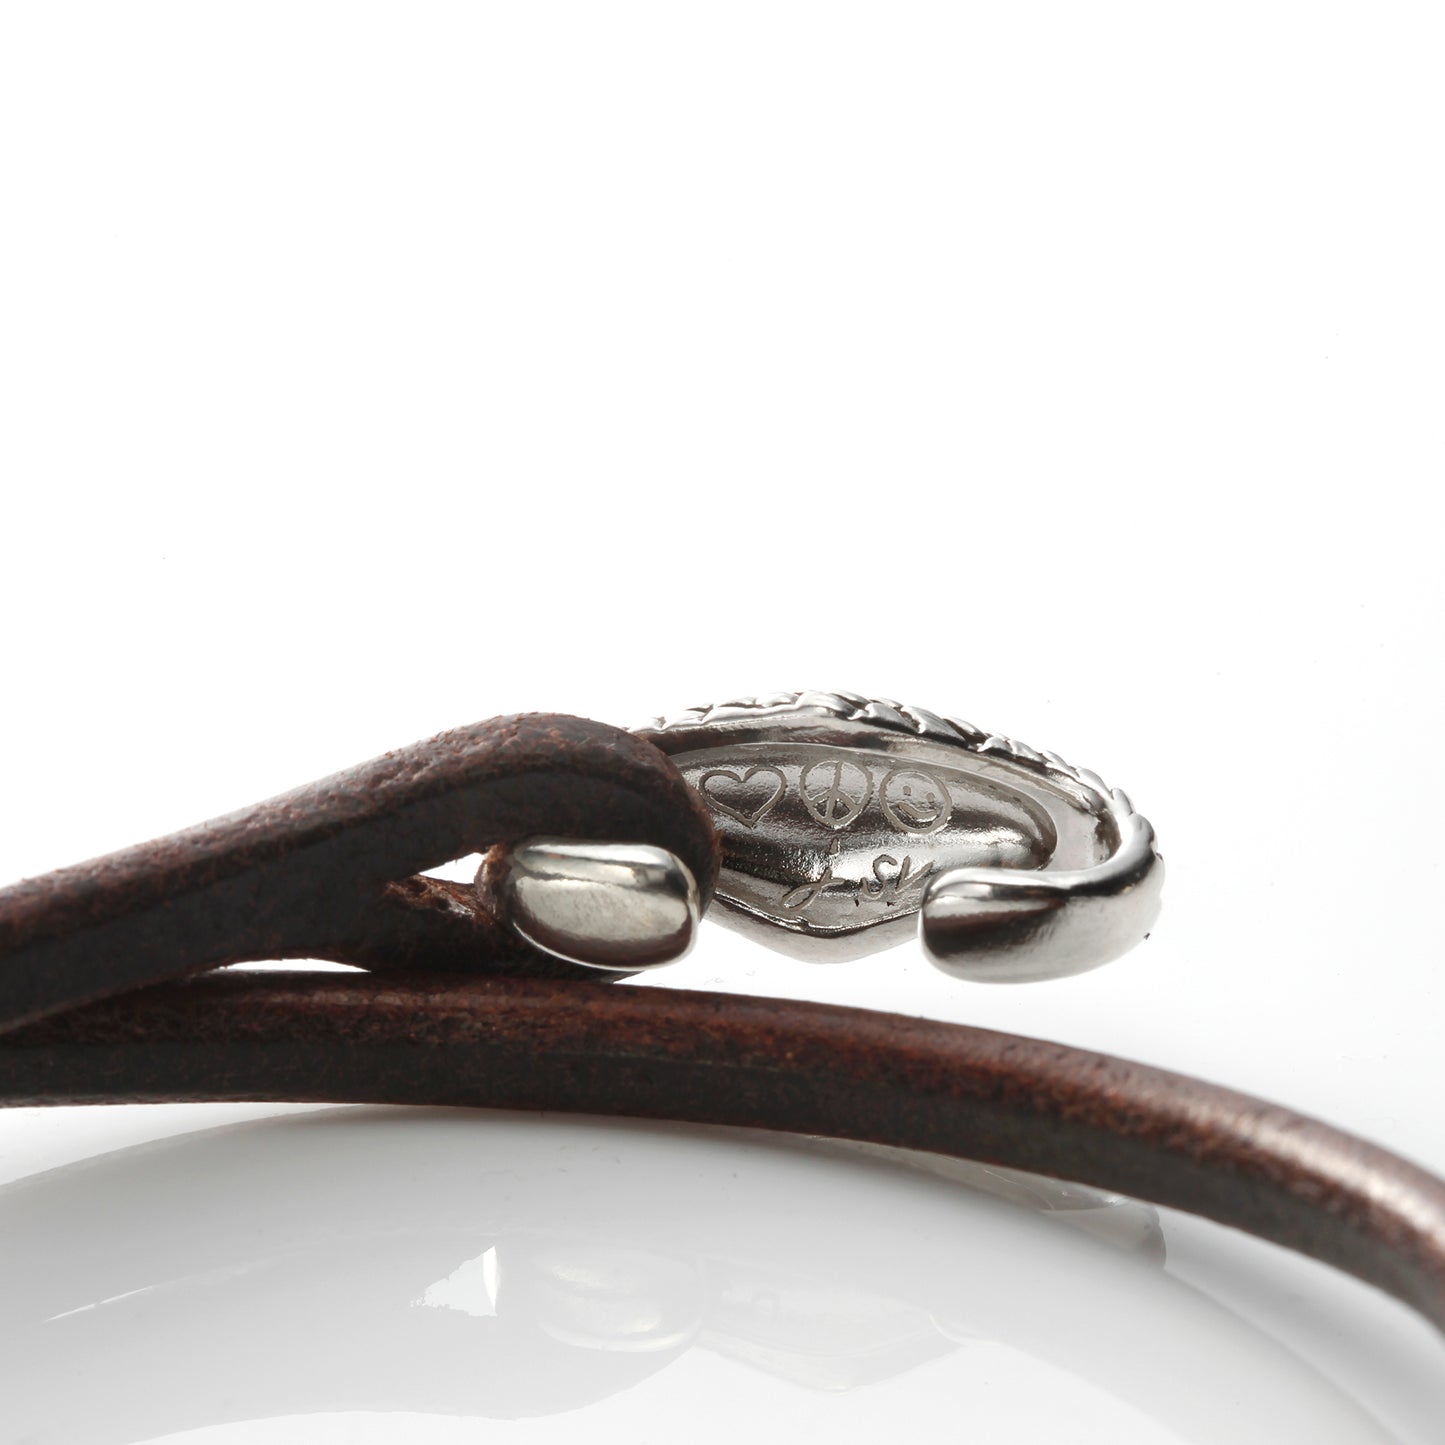 Rhombus Leather Bracelet  - Silver Python Snake -